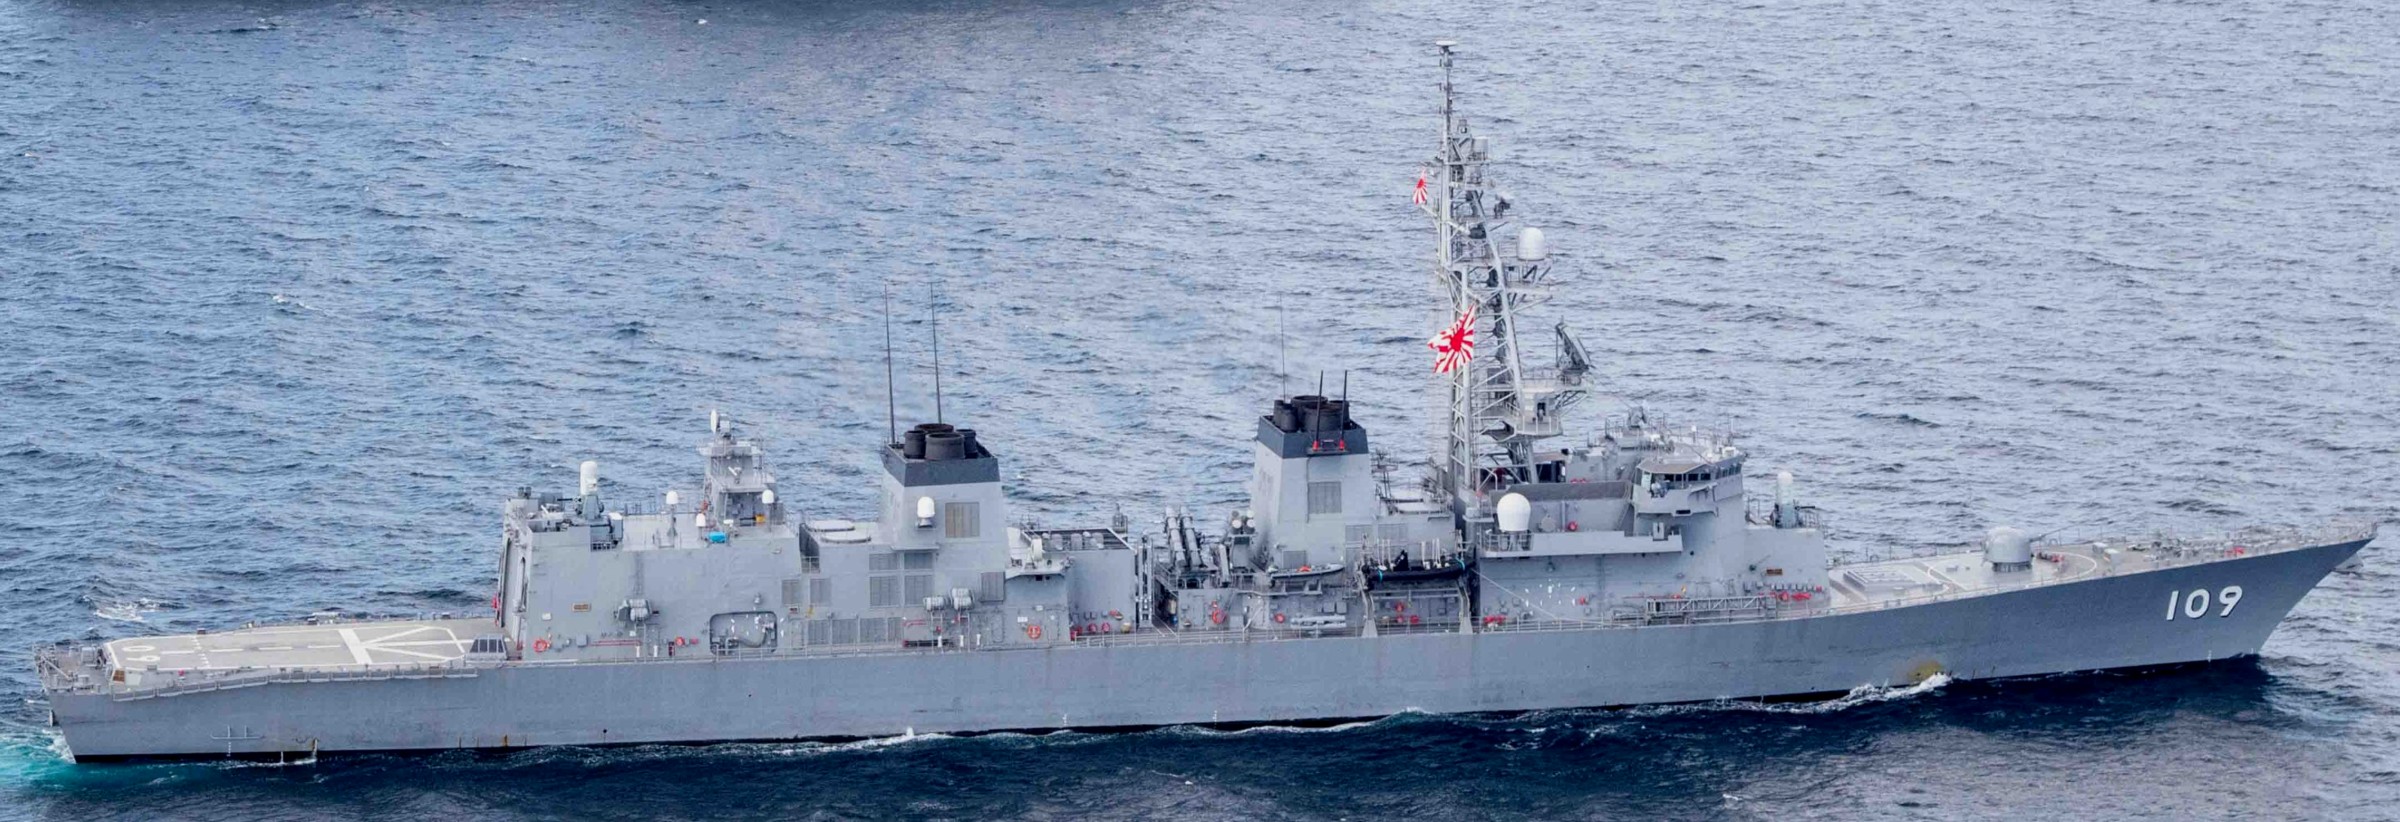 dd-109 js ariake murasame class destroyer japan maritime self defense force jmsdf 22